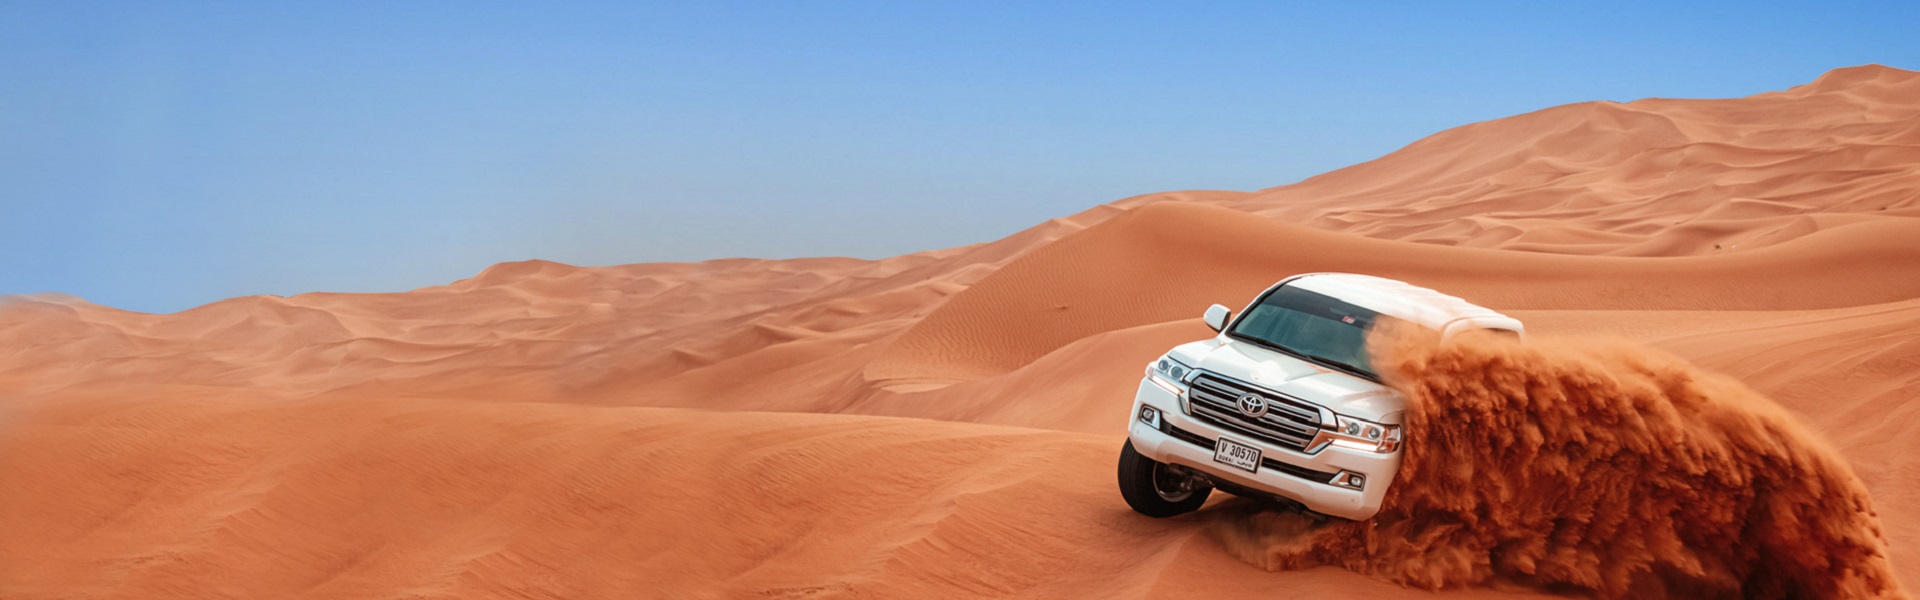 Prodaja Hyundai vozila | Desert safari in Dubai